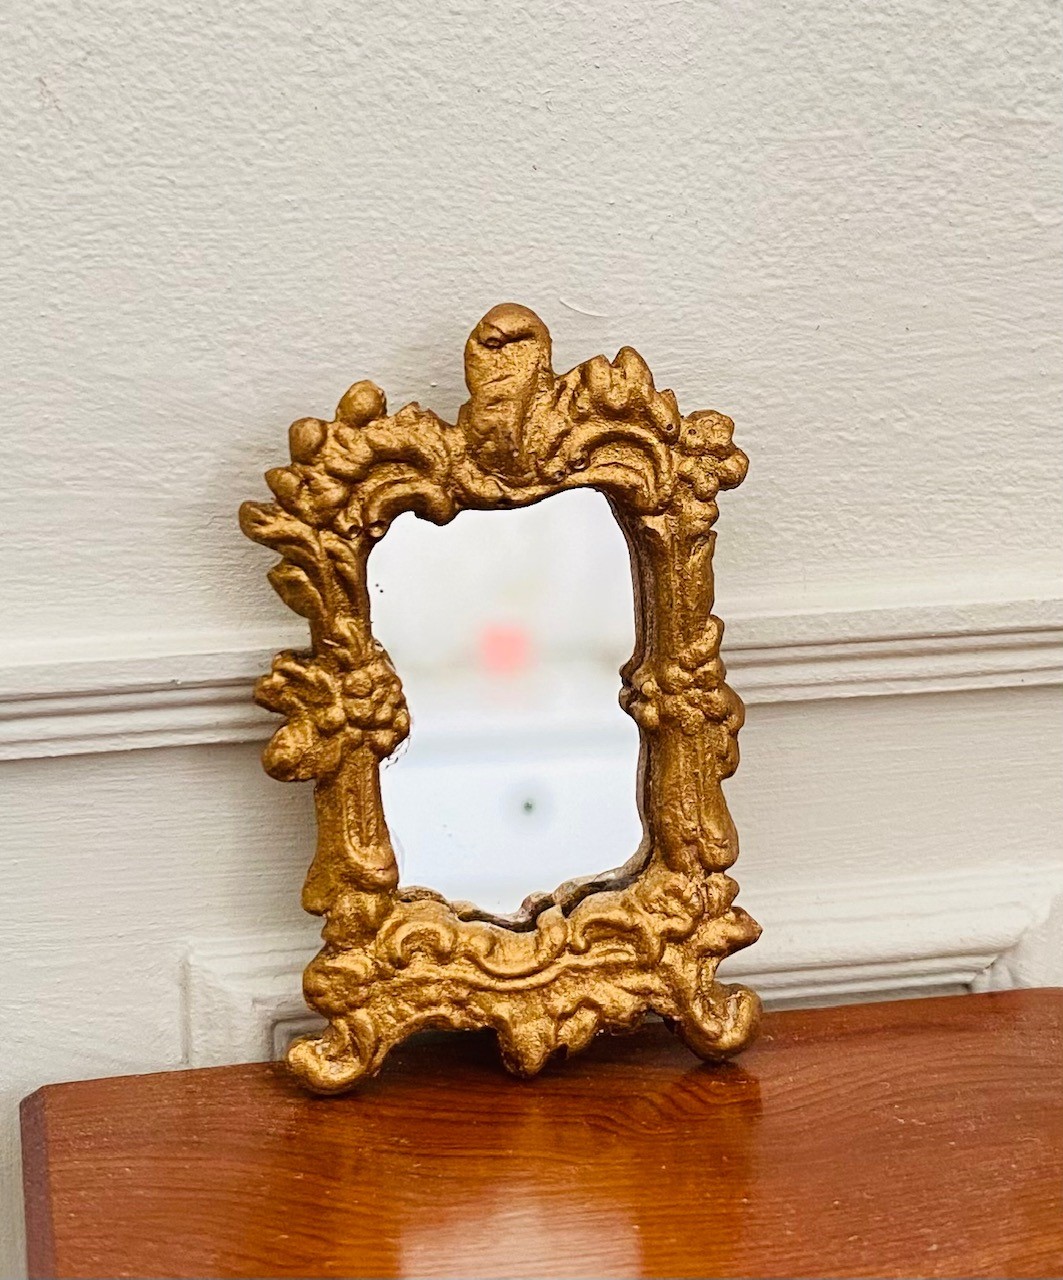 Lilla spegeln old gold